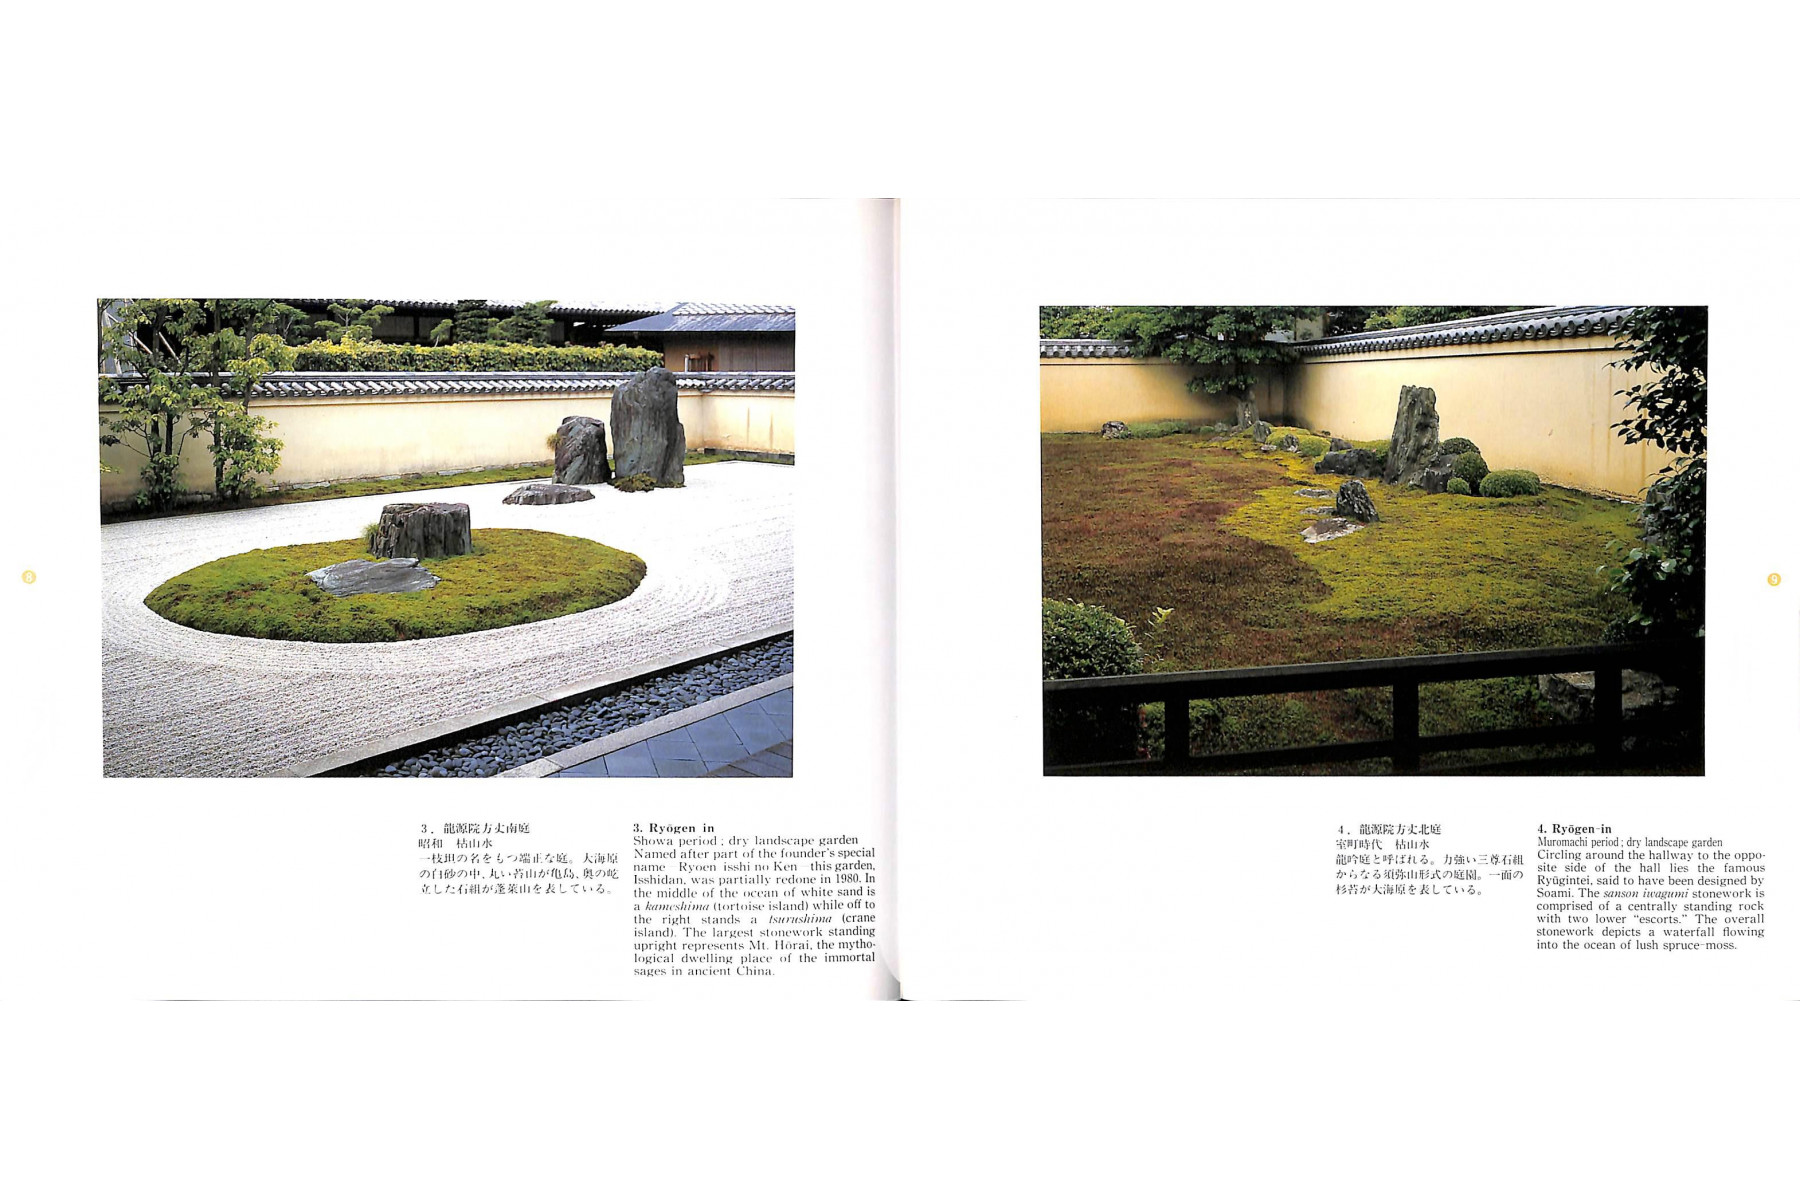 Zen Gardens: Kyoto's nature enclosed by Thomas Wright